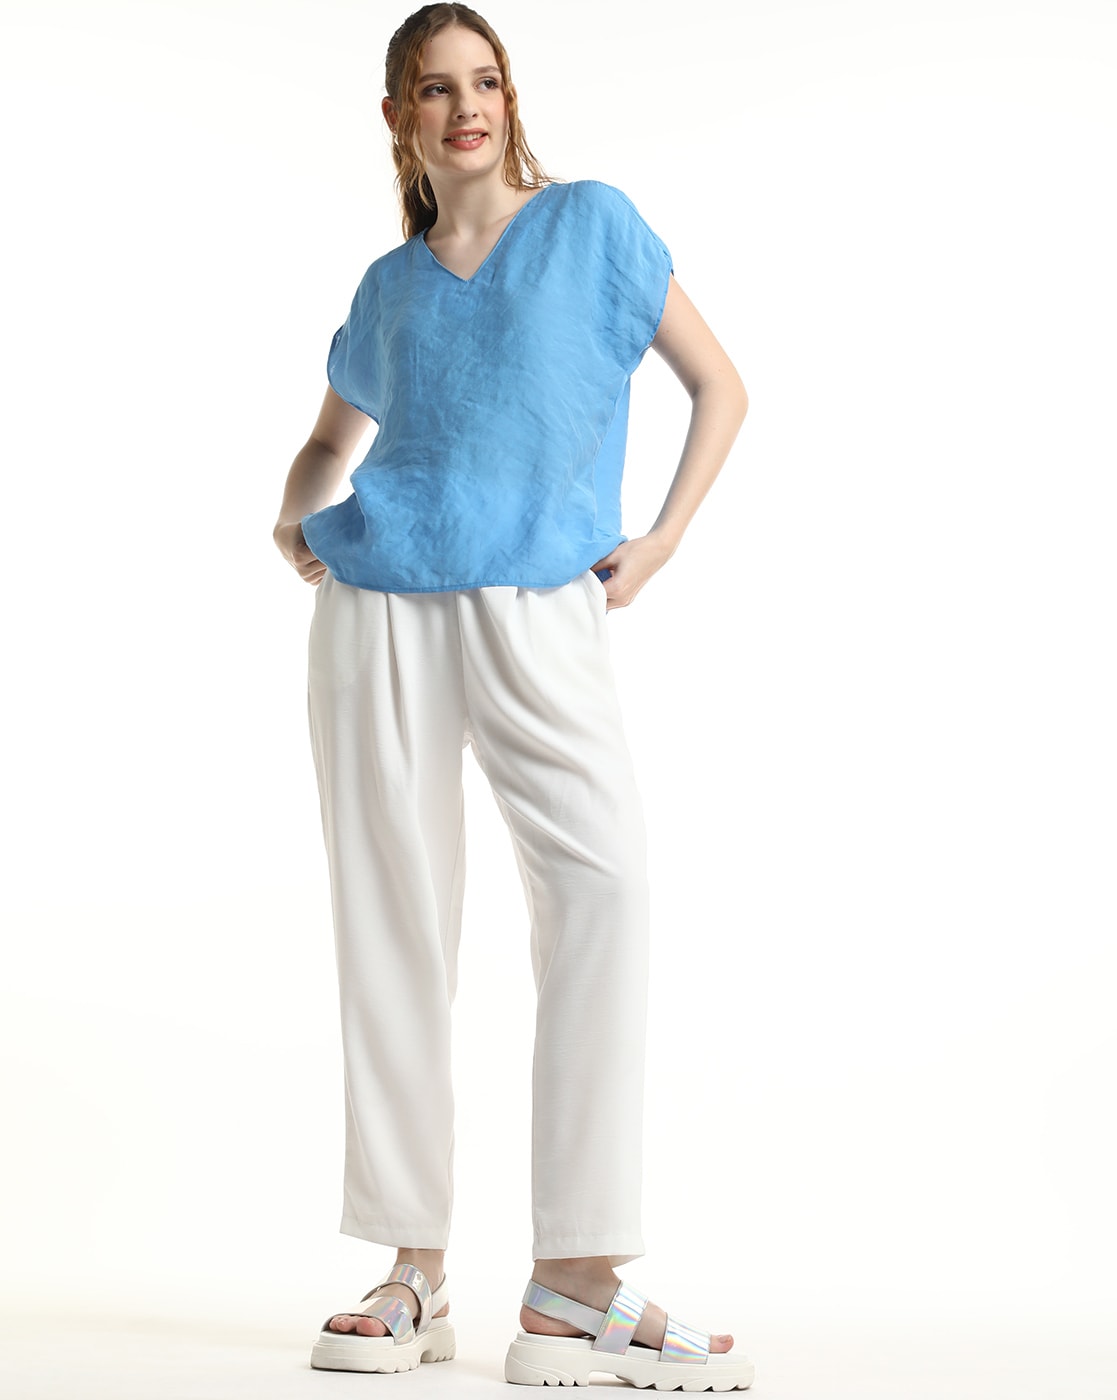 Buy Blue Tops for Women by SAM Online